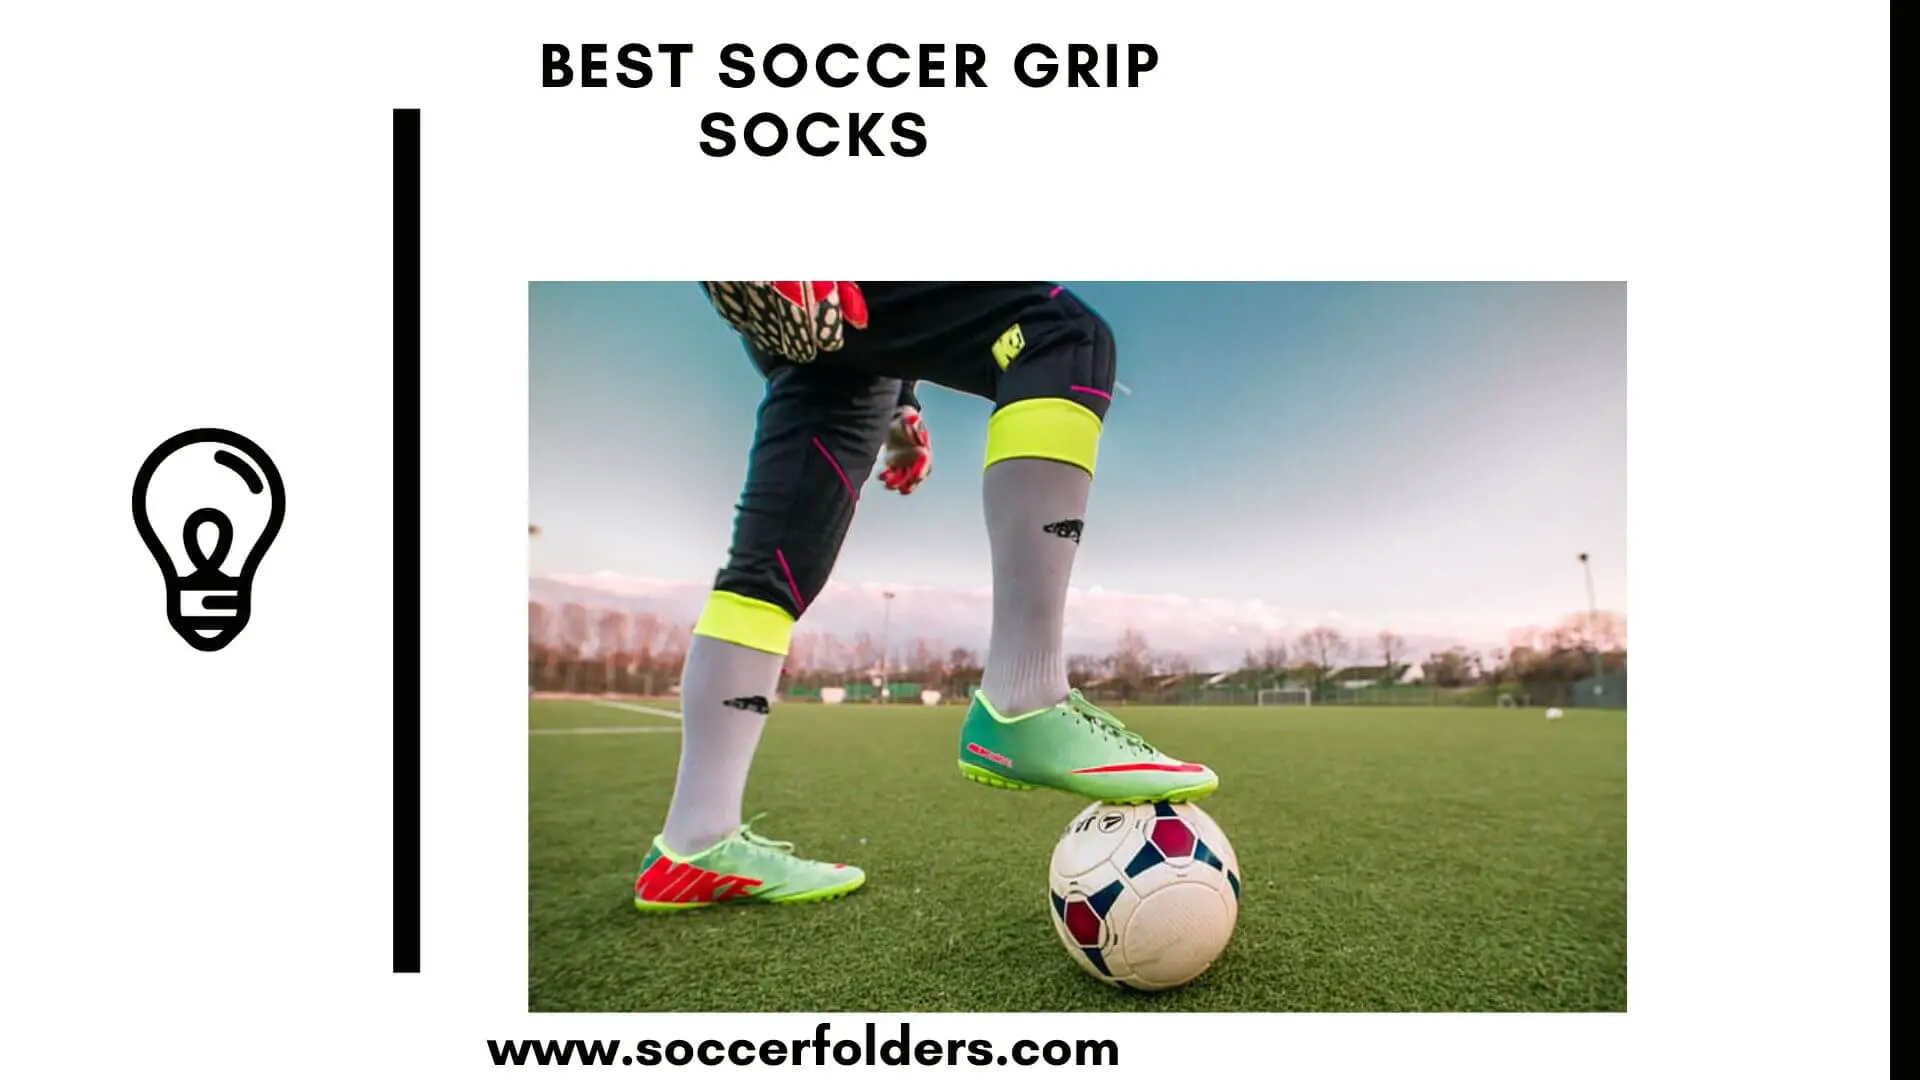 Best soccer grip socks - Featured image